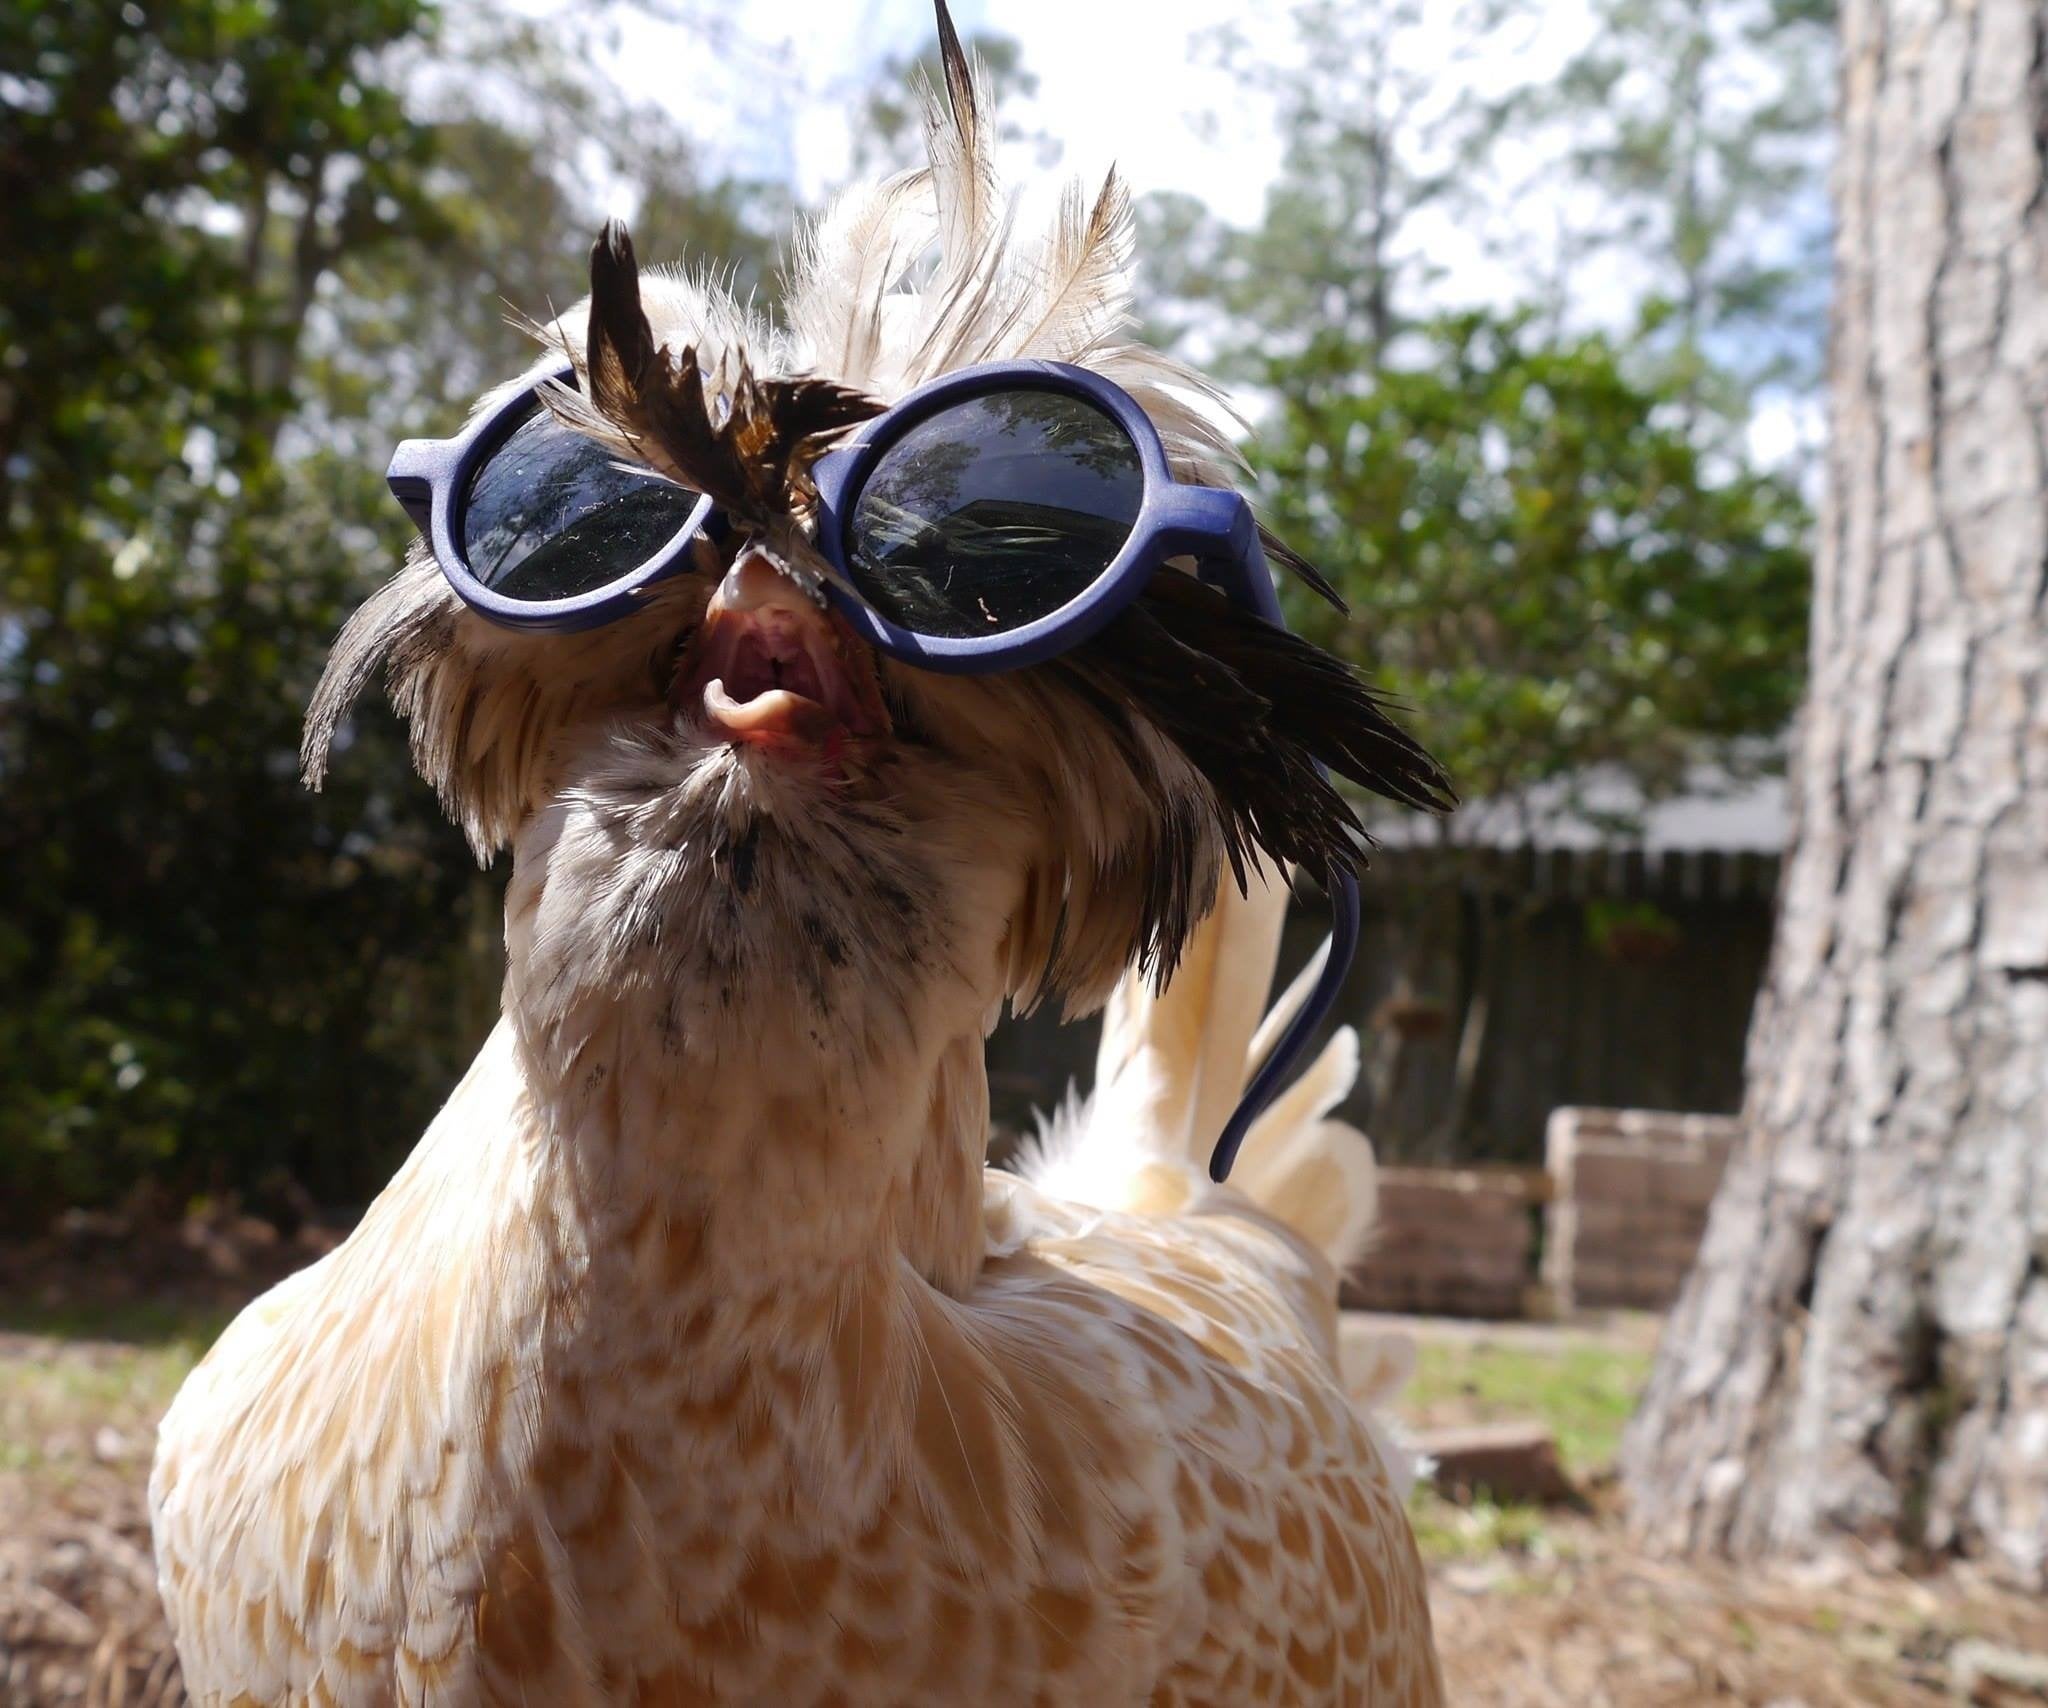 PsBattle: Chicken with sunglasses : photoshopbattles